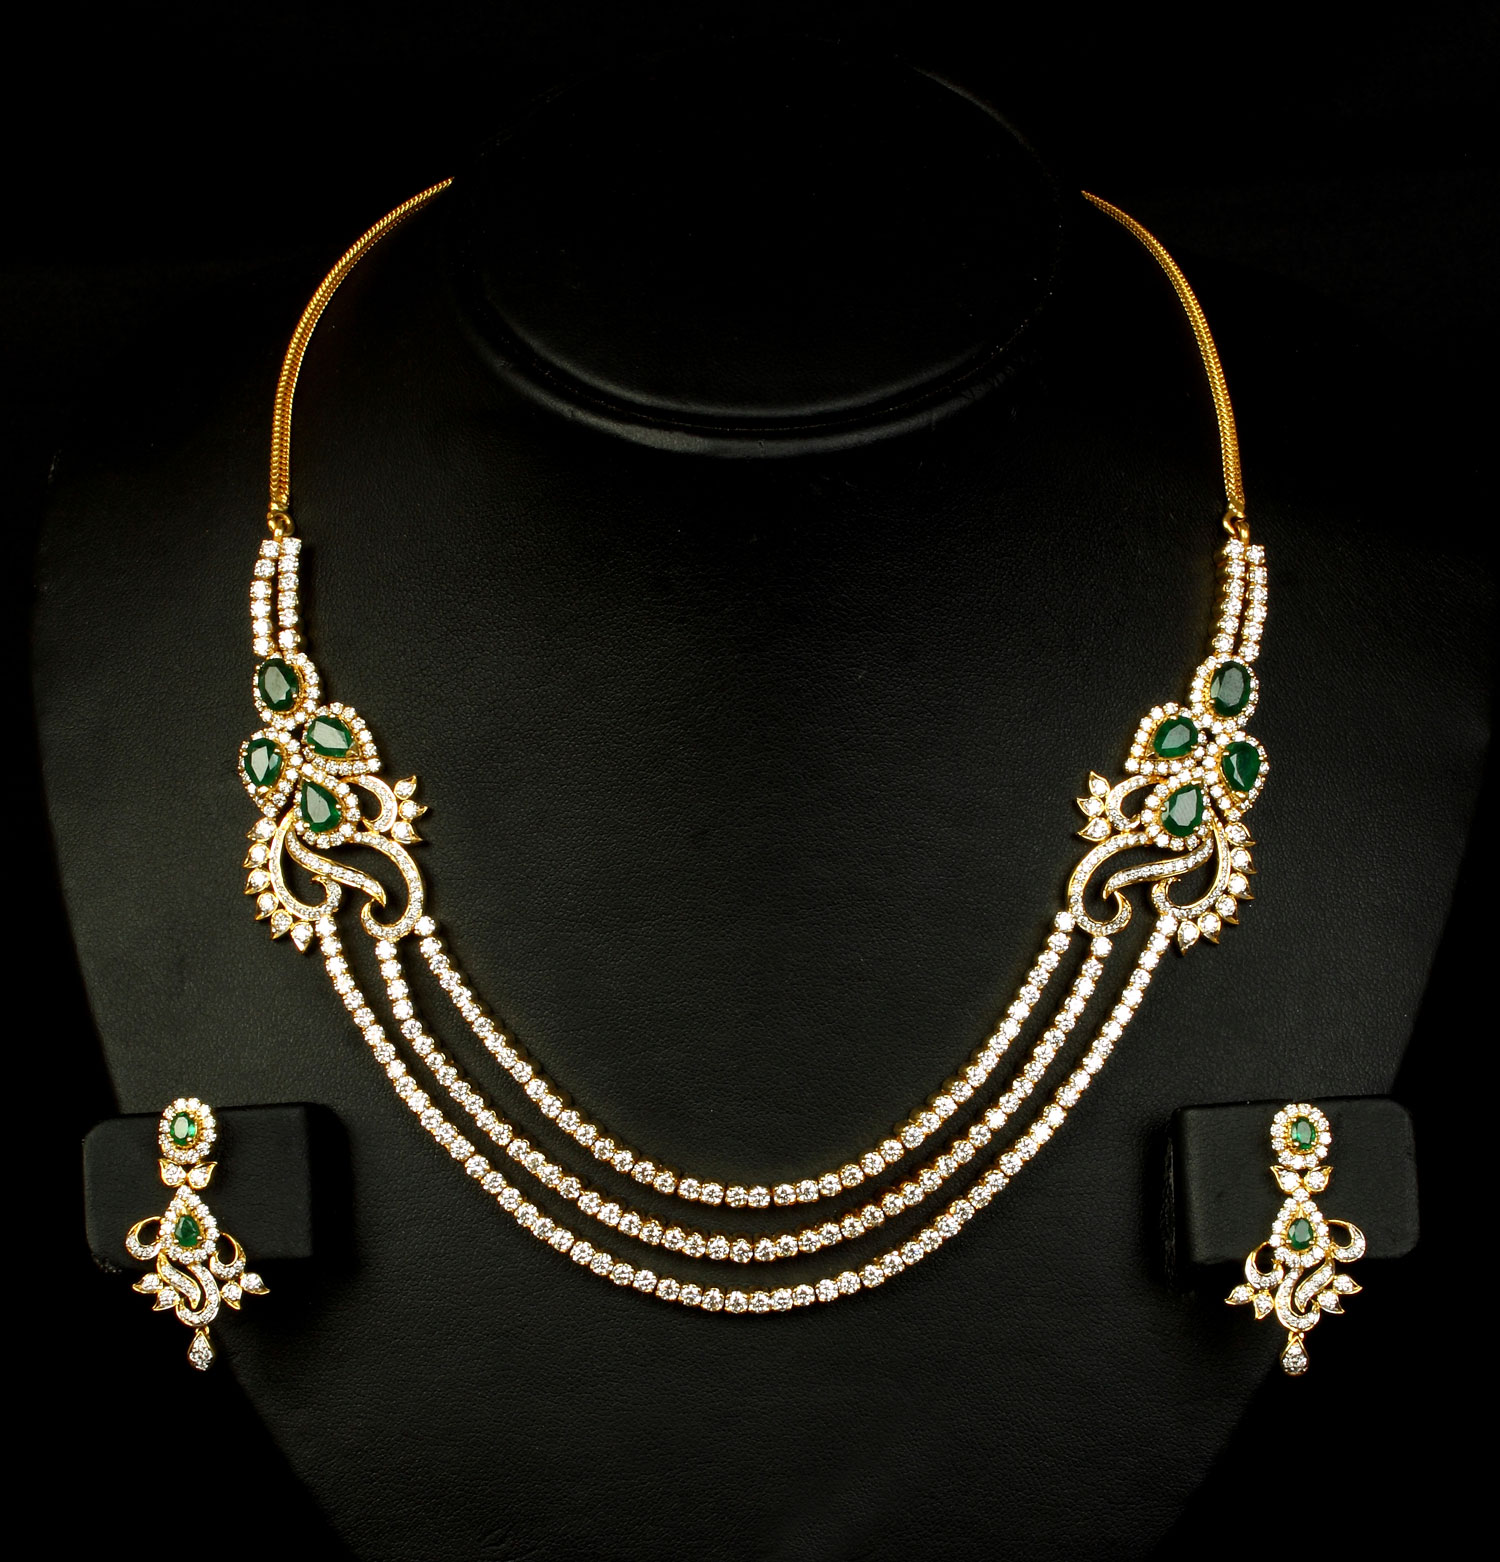 Sale news and Shopping details: VBJ Diamond Necklace Models